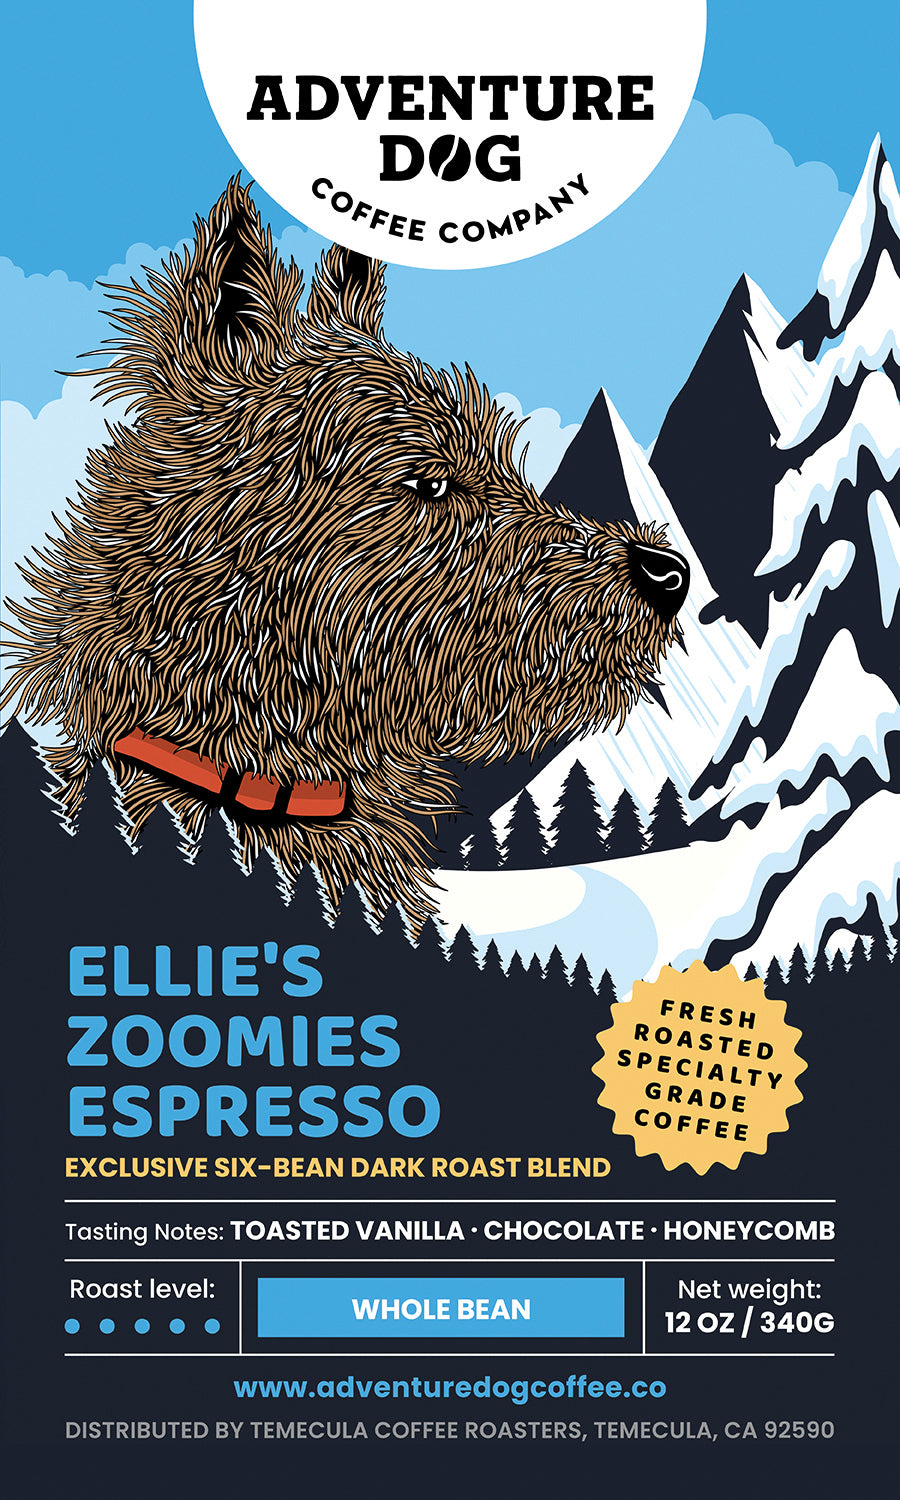 Ellie's Zoomies Espresso